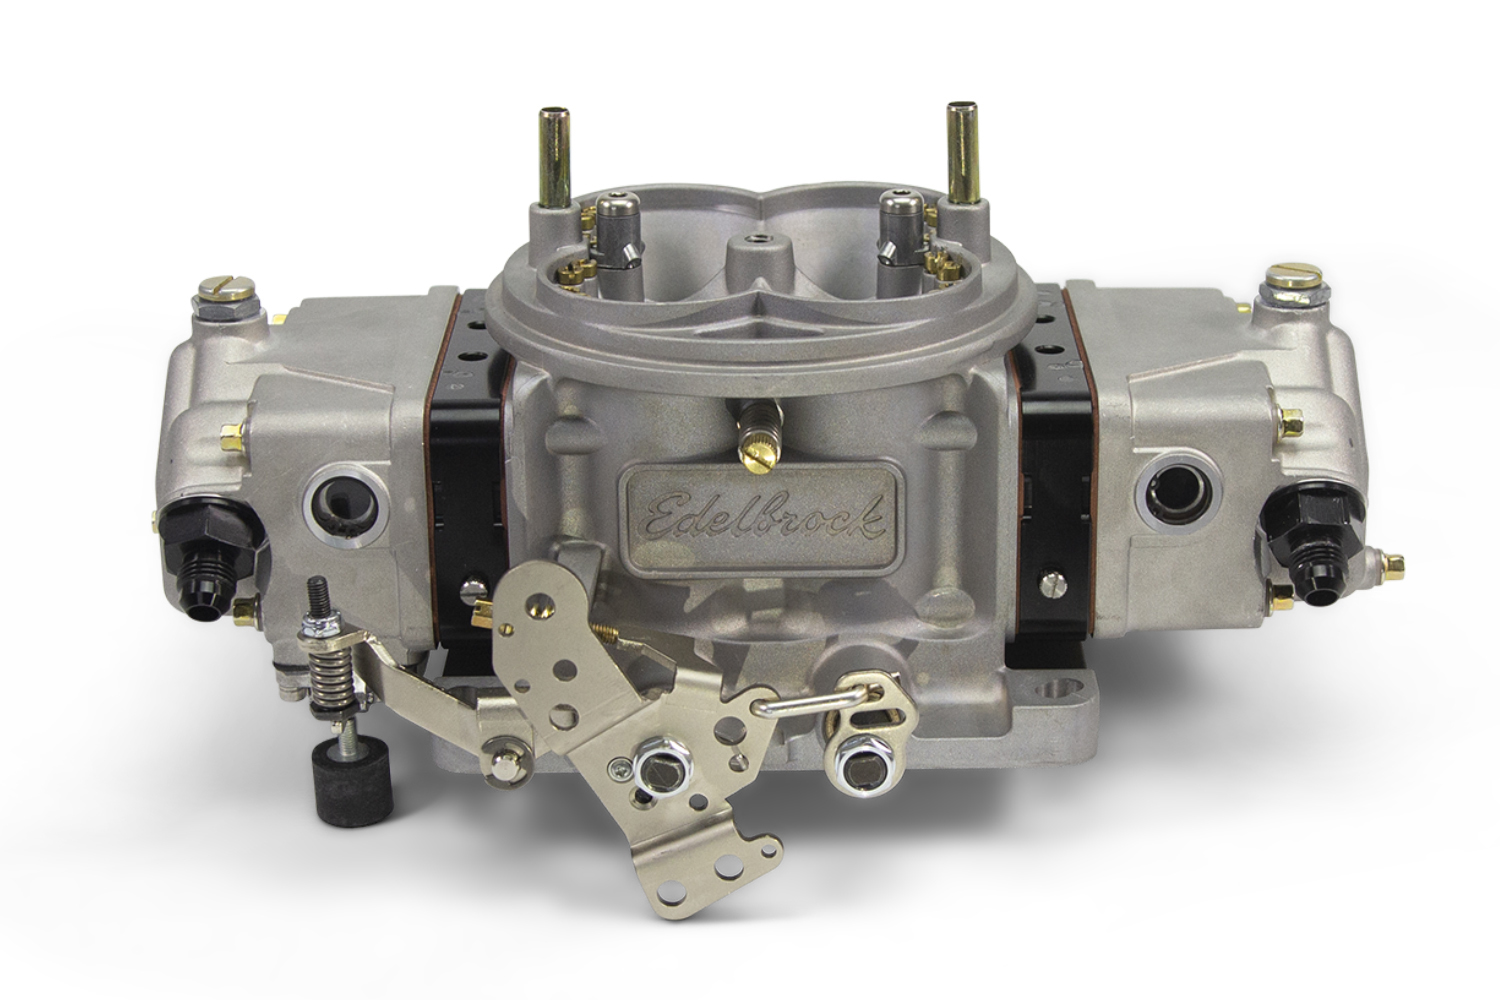 Tech Review—Edelbrock VRS-4150 Carburetor